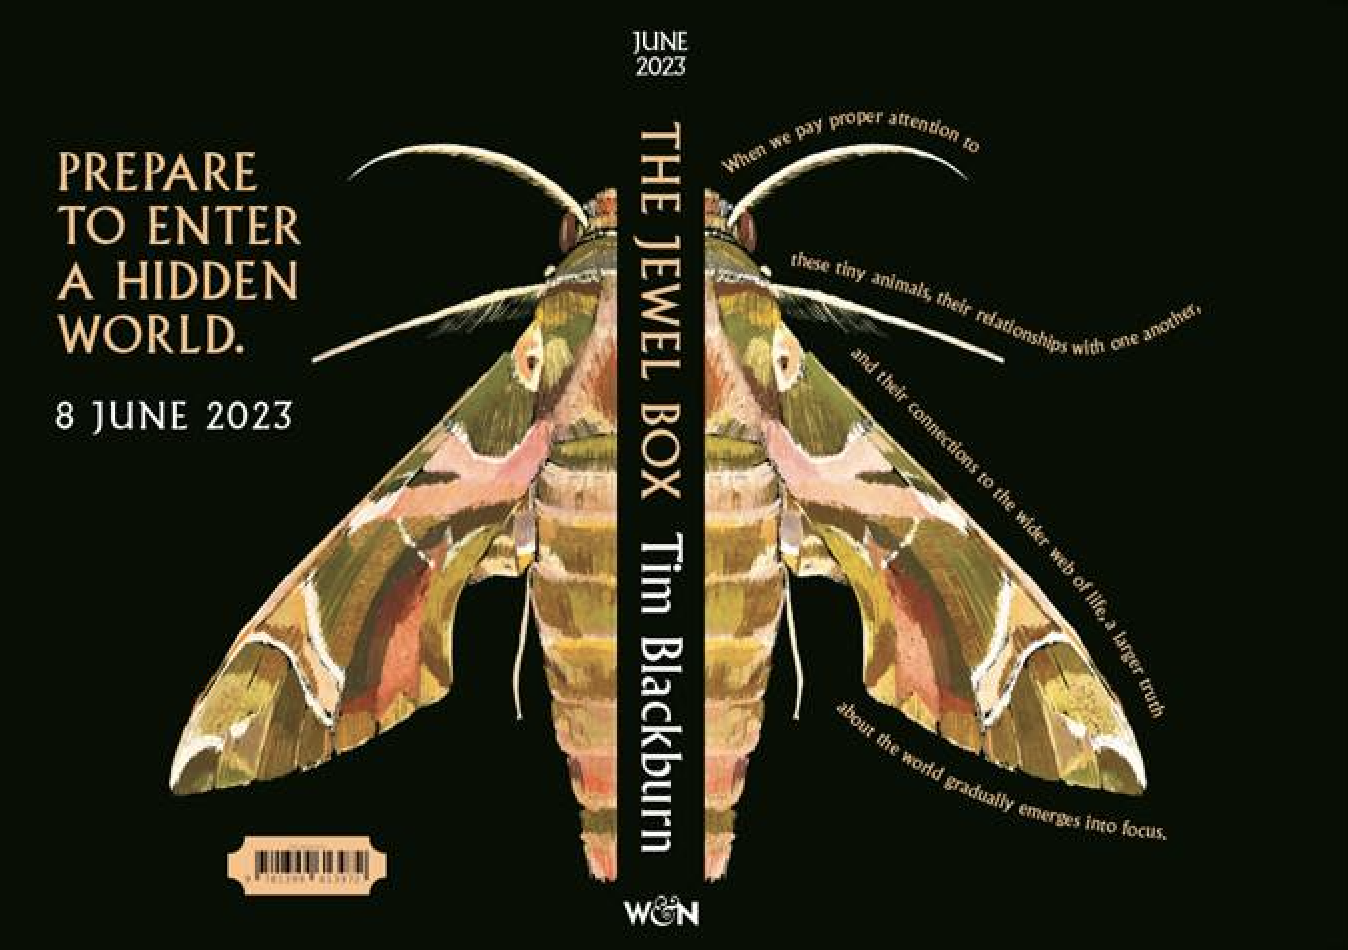 The Jewel Box: How moths illuminate nature’s hidden rules.